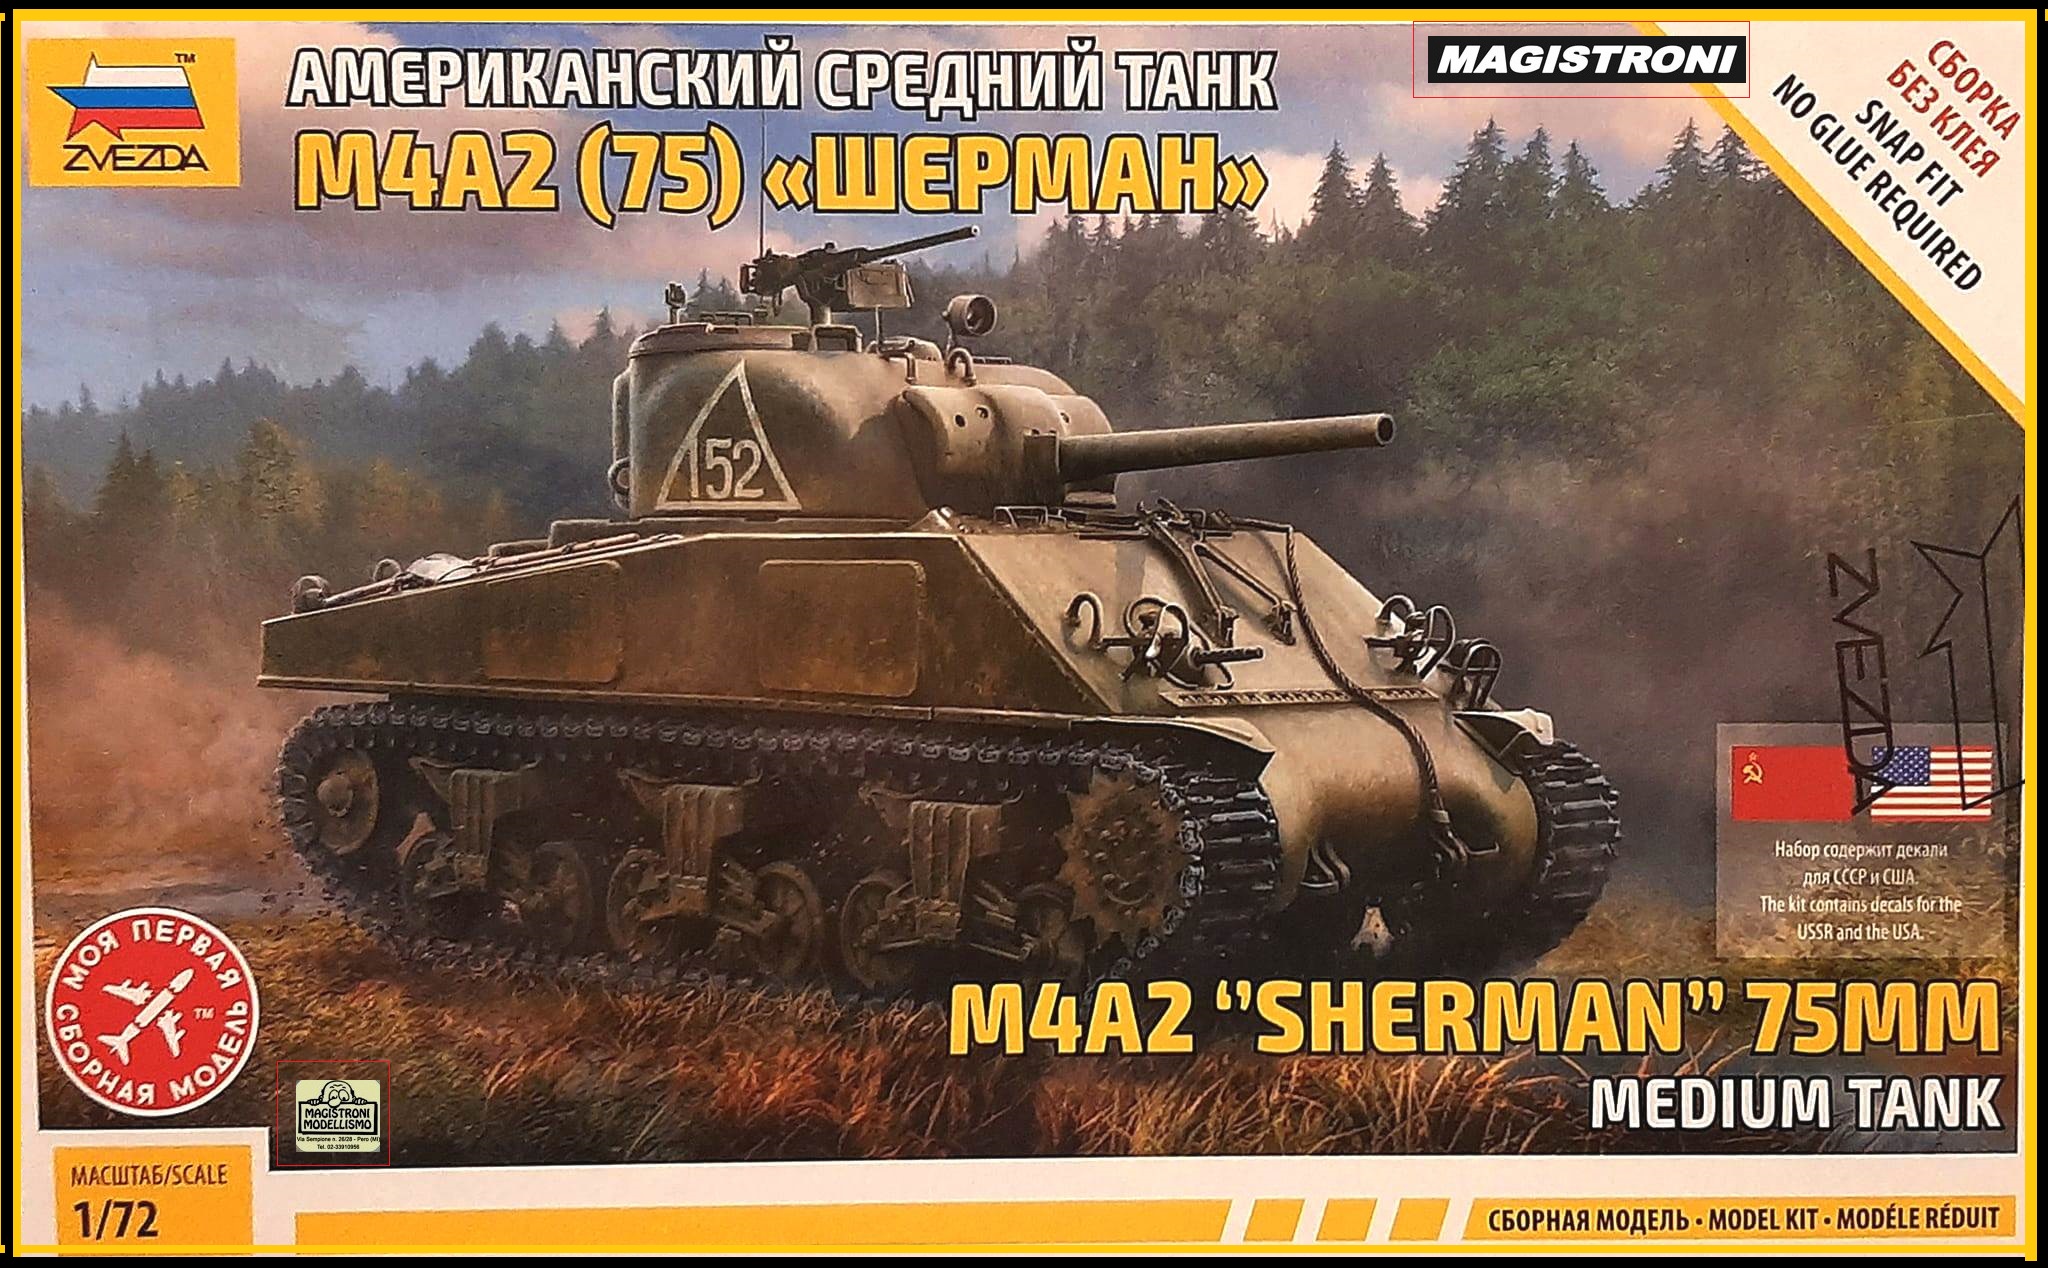 M4A2 "SHERMAN" 75mm MEDIUM TANK